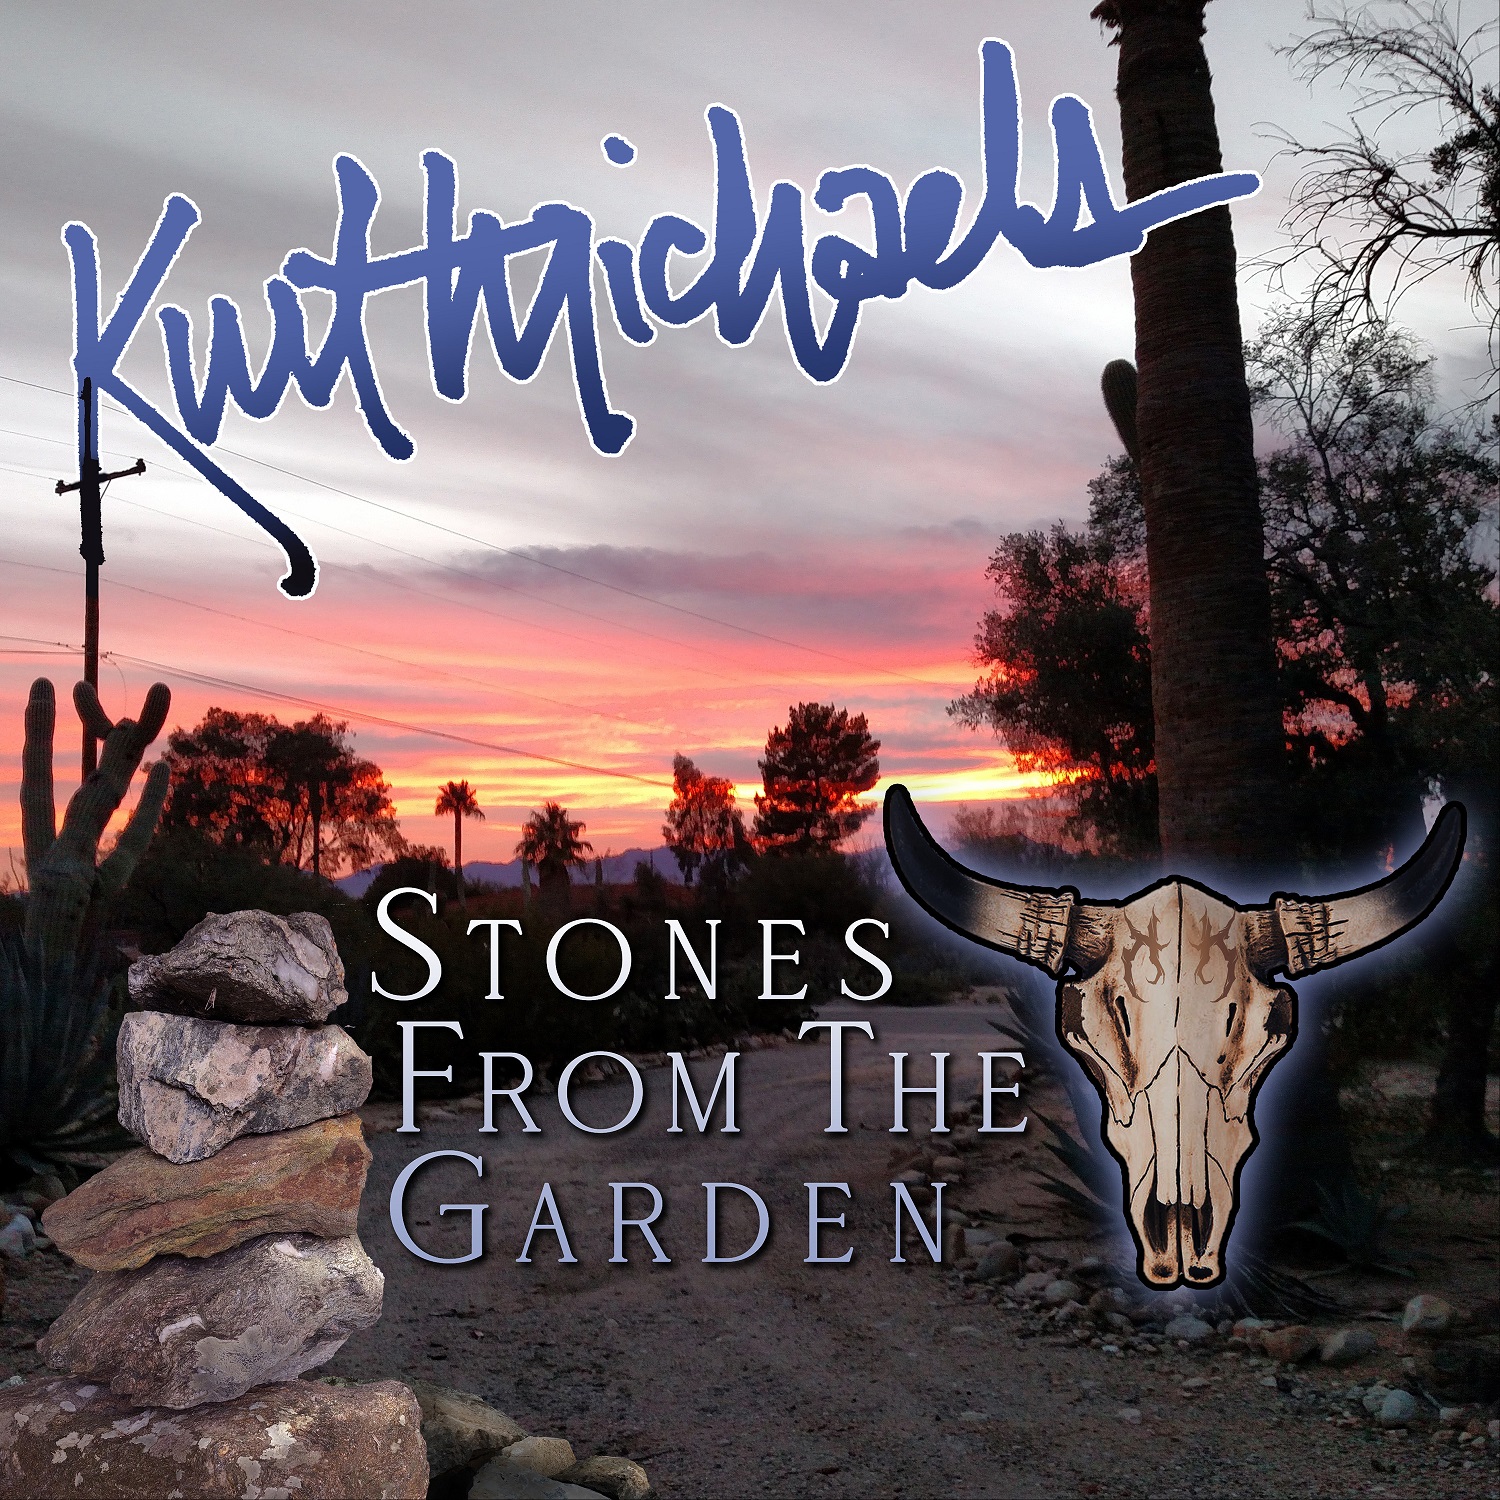 Kurt Michaels  - "Stones From The Garden"